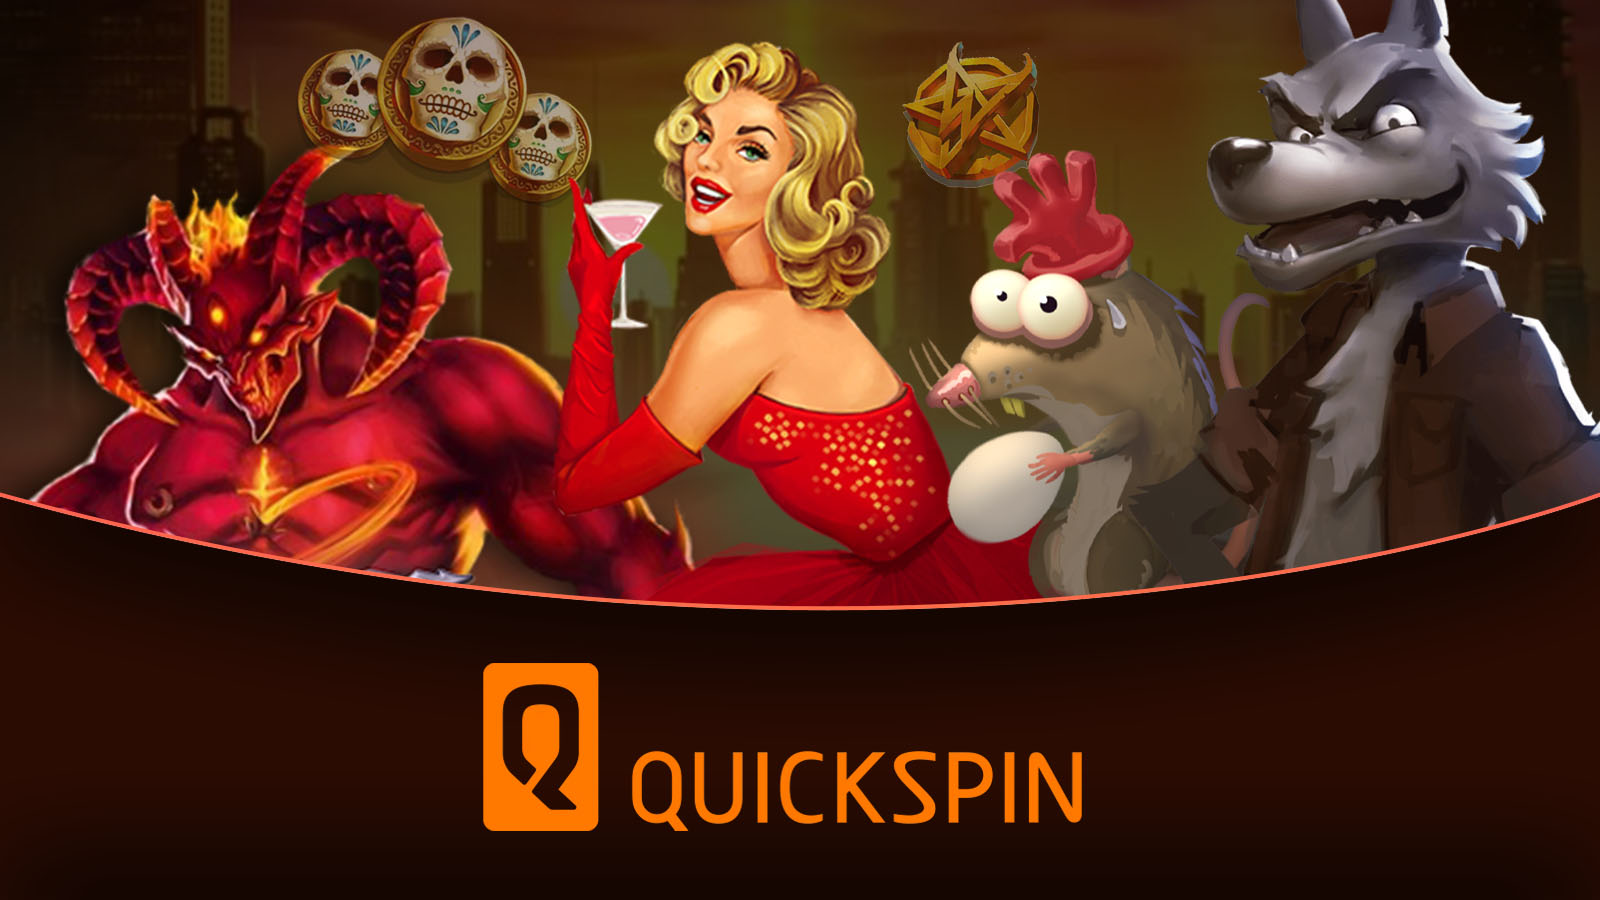 Quickspin Our Favourite Casino Game Provider in Terms of Impressive Designs